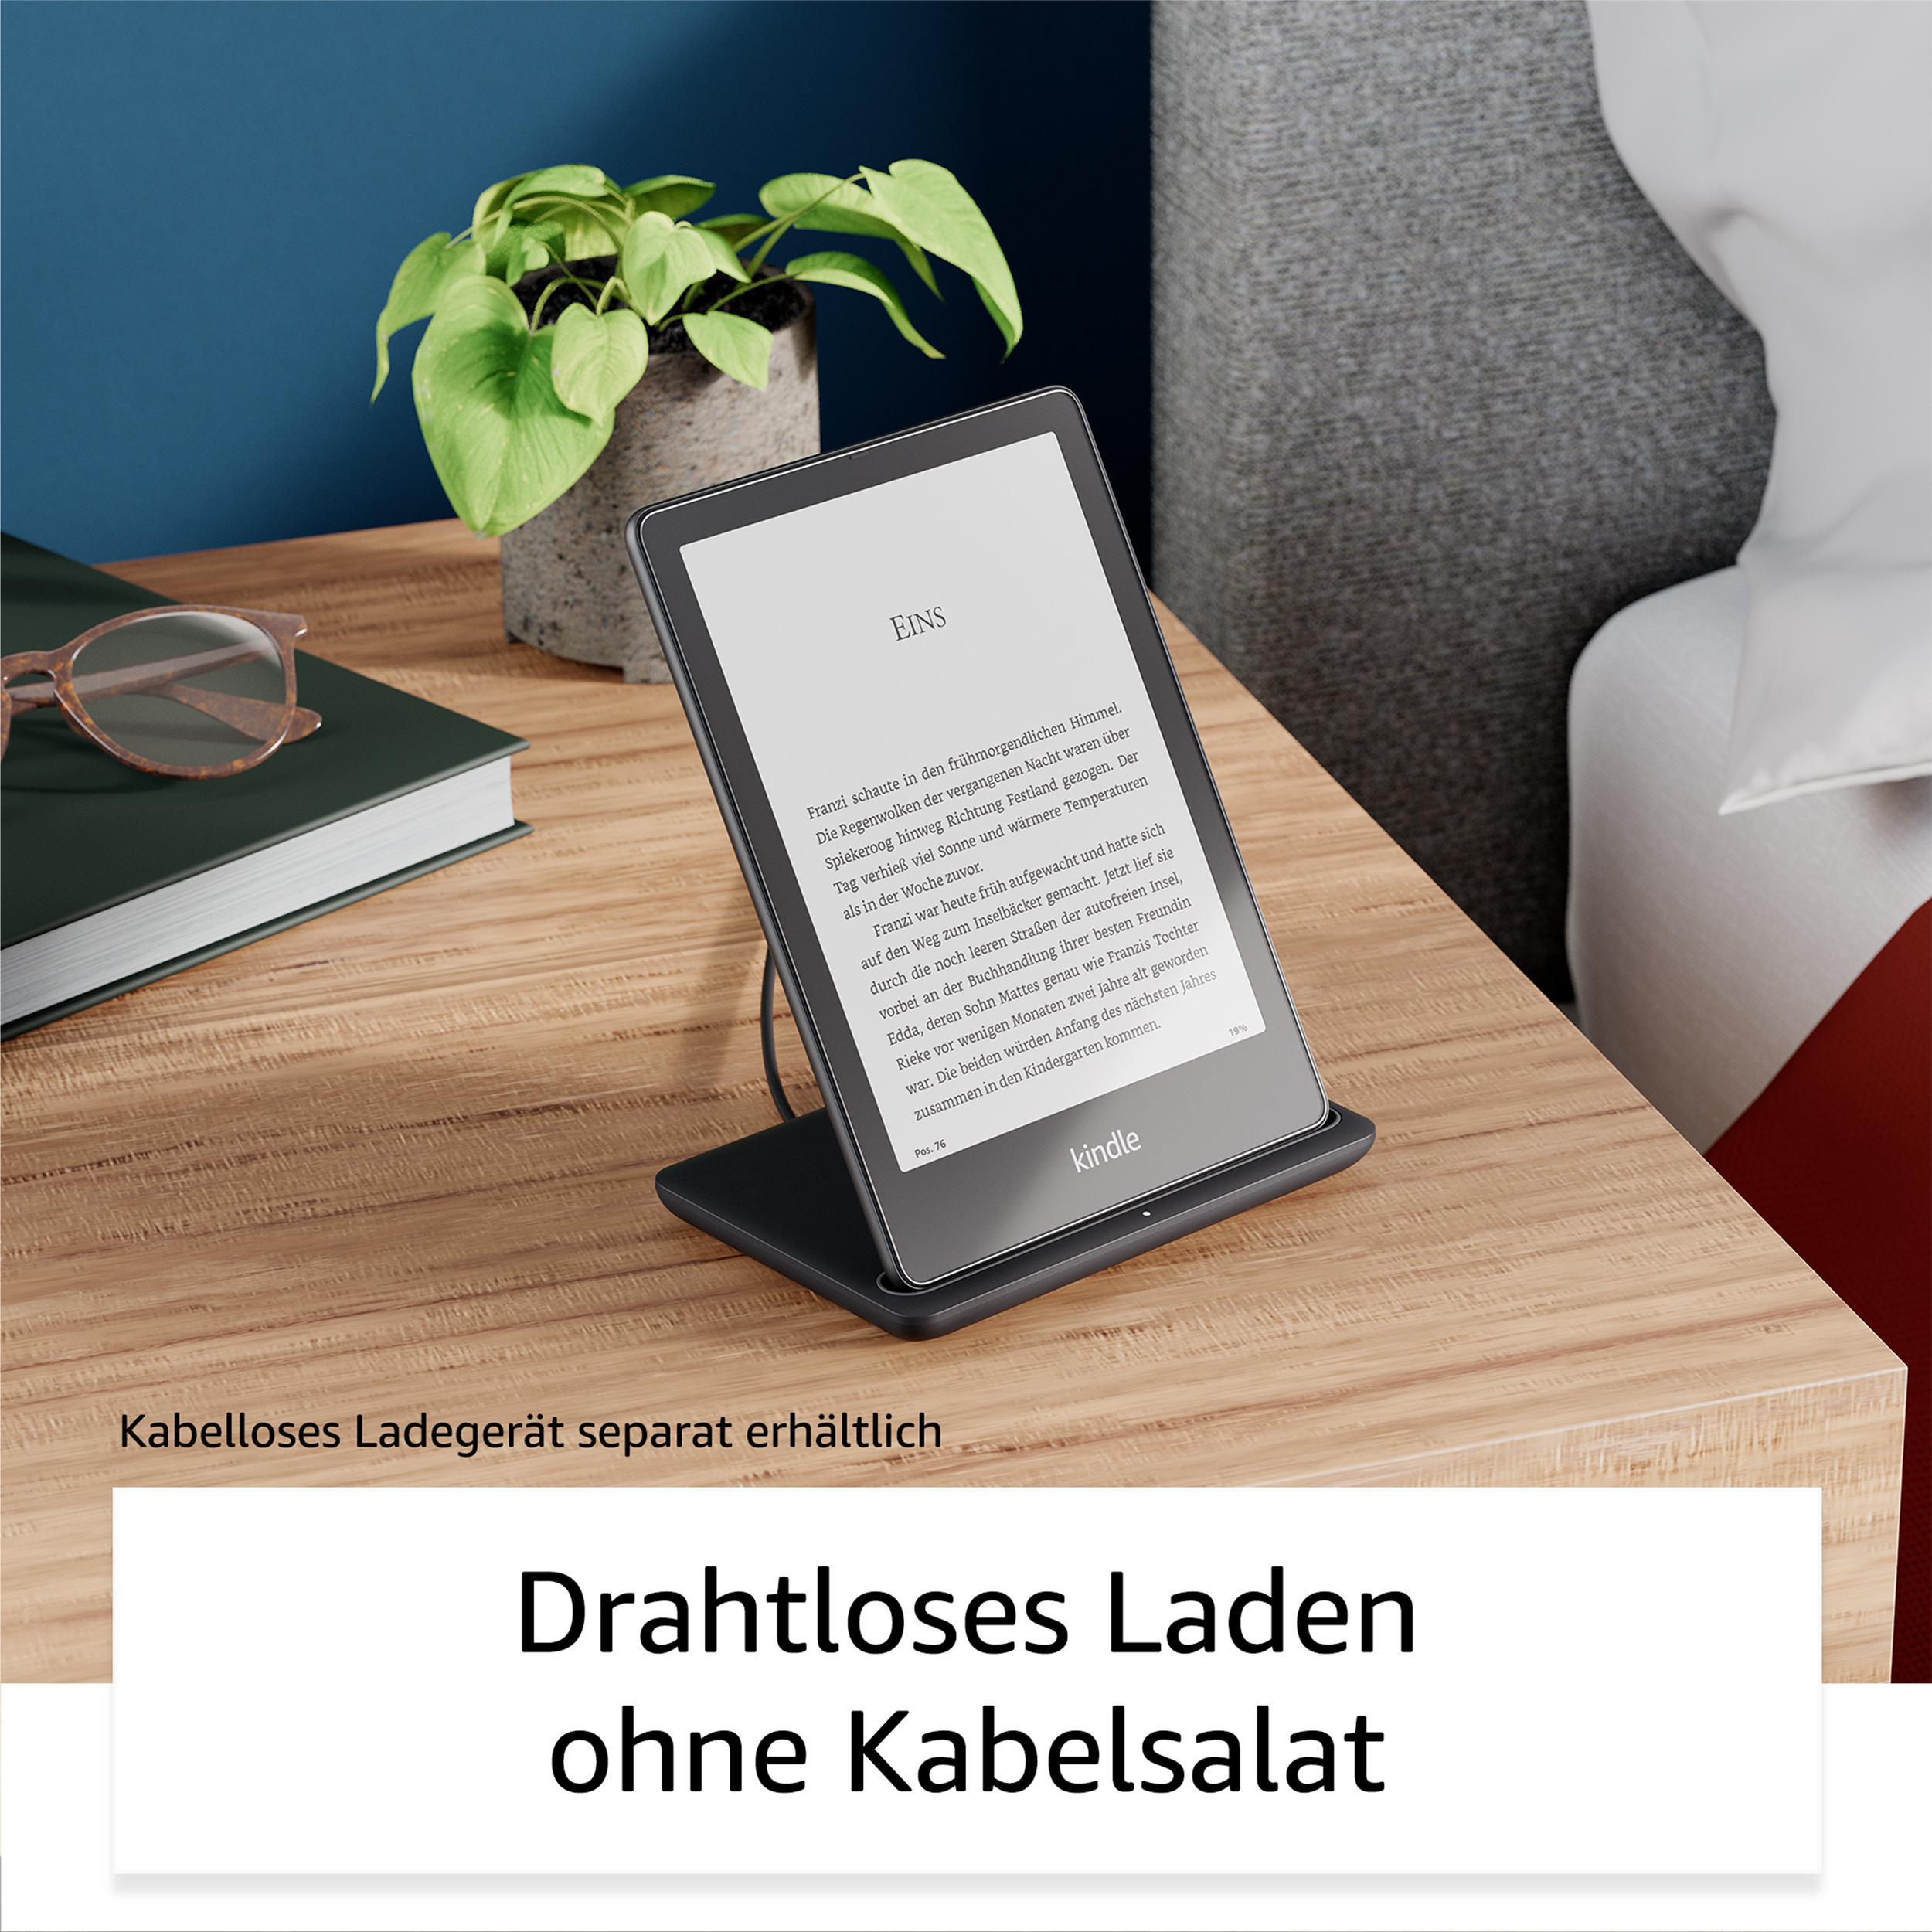 32 GB (11. release Kindle B08N2QK2TG KINDLE Schwarz Edition Generation) Paperwhite | 2021 Paperwhite Signature